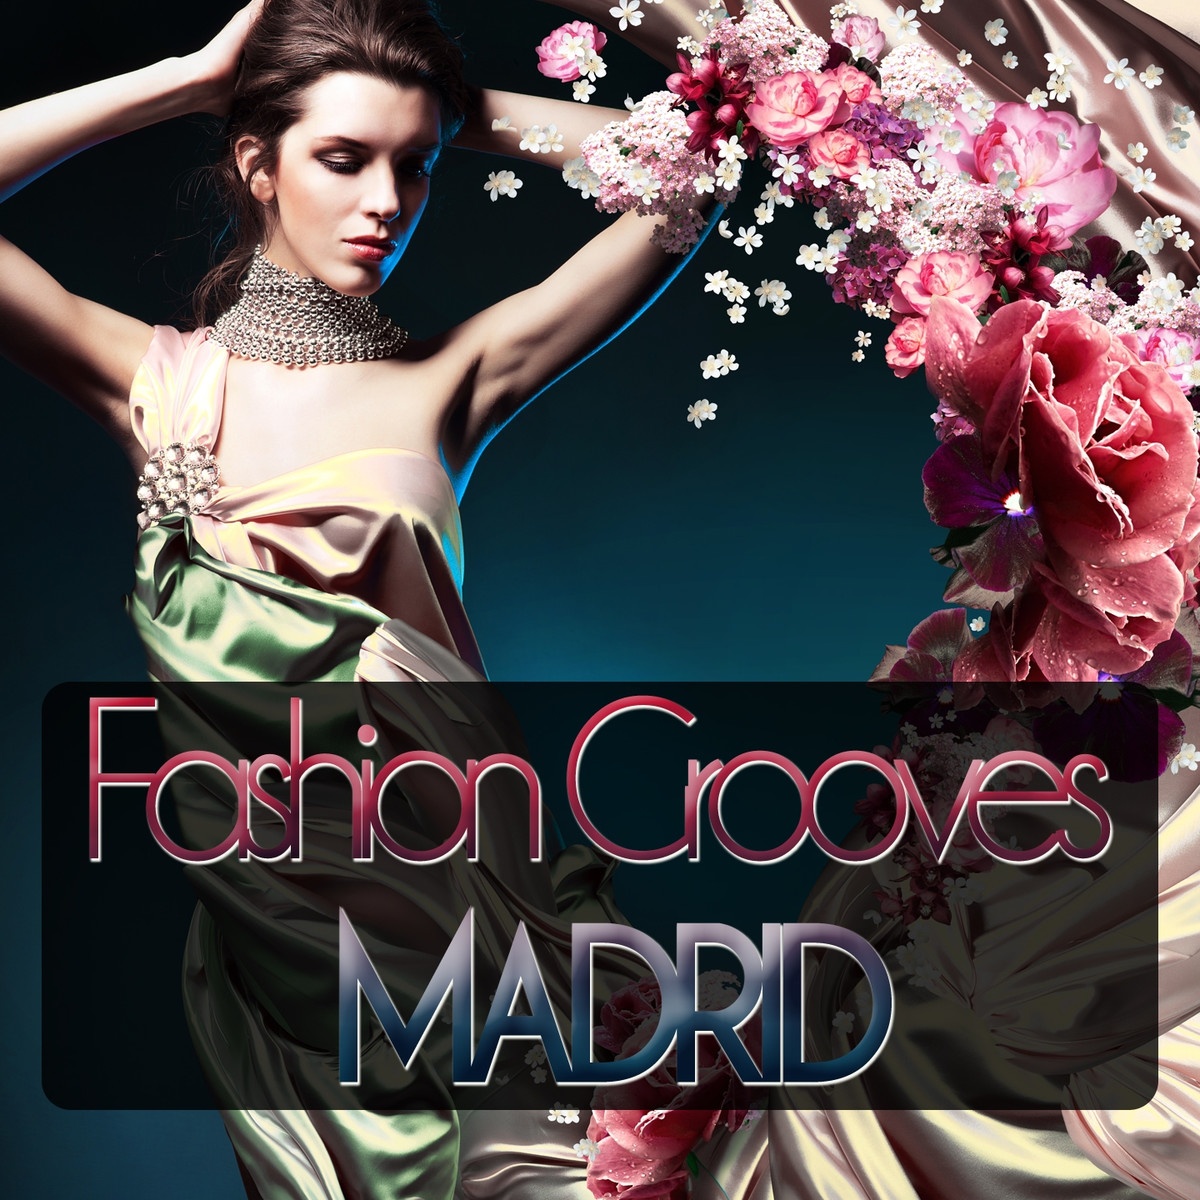 Fashion Grooves Madrid